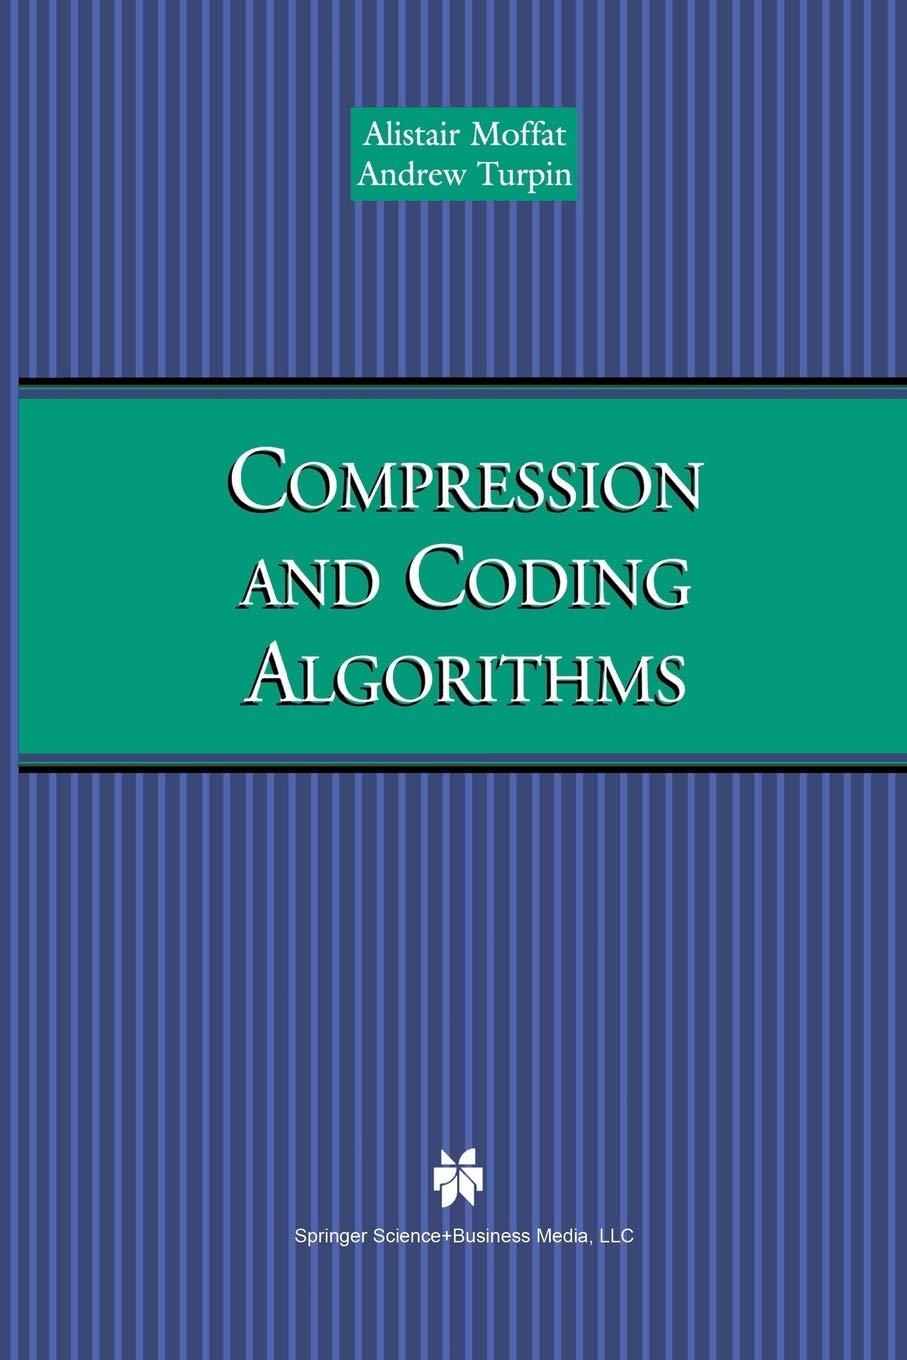 compression and coding algorithms 2002 edition alistair moffat 1461353122, 978-1461353126